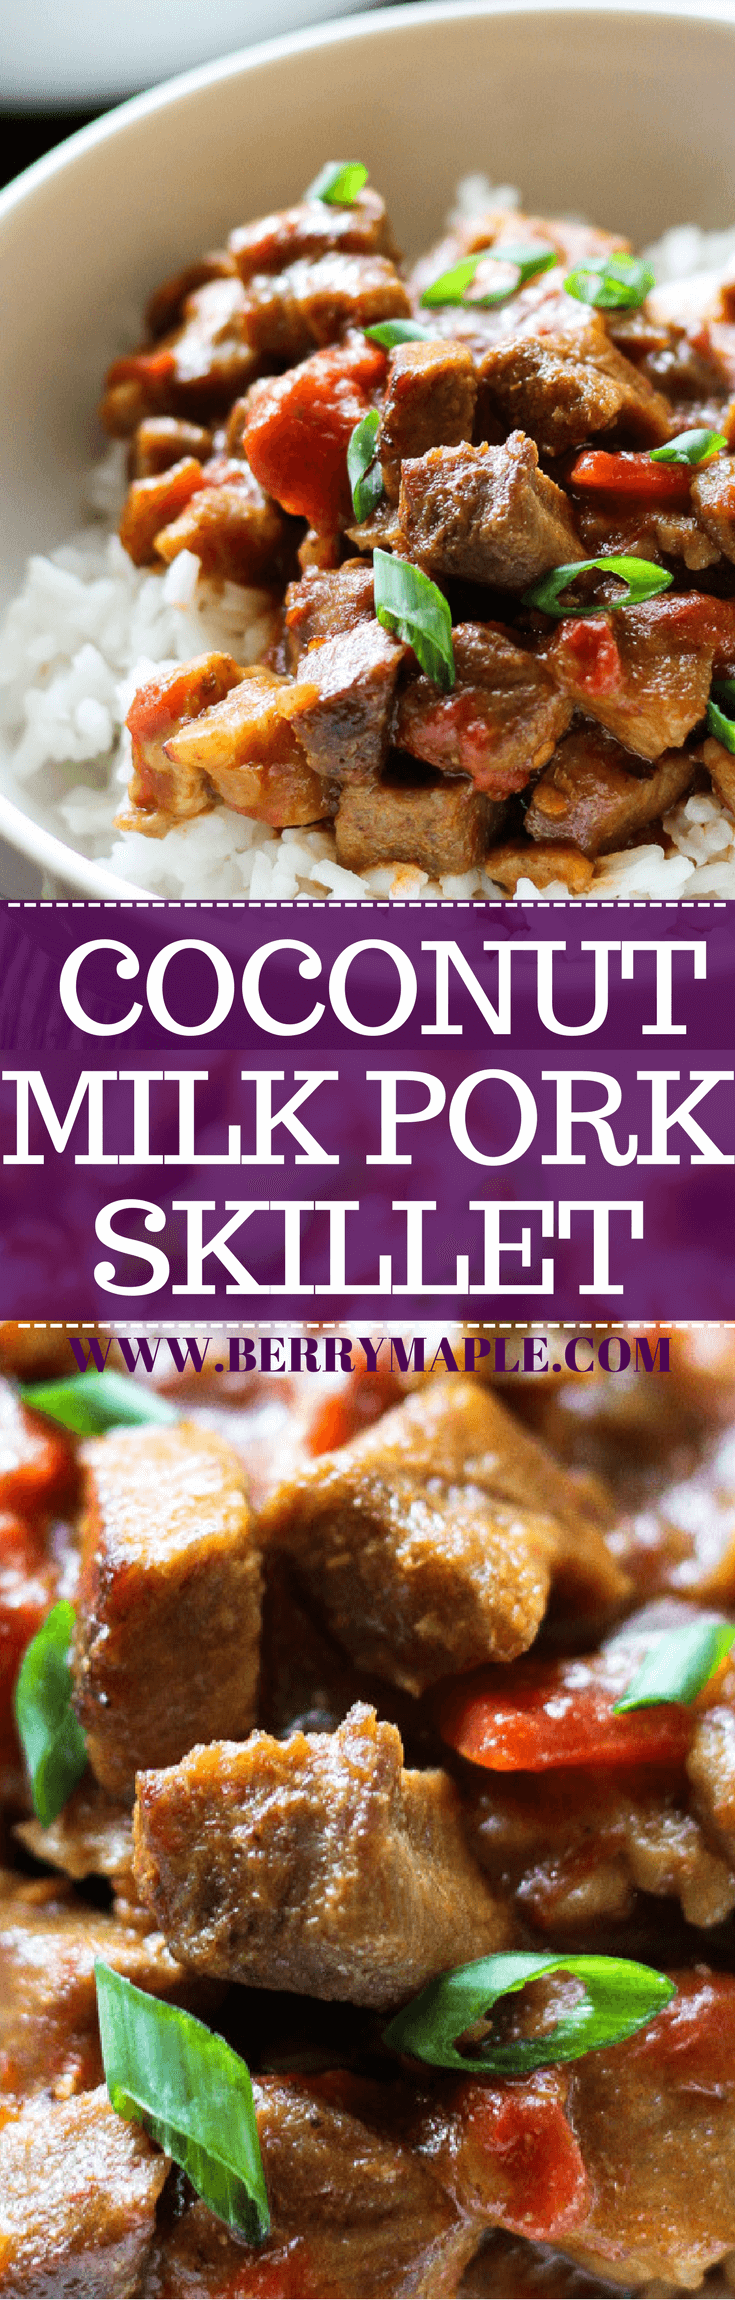 coconut milk pork skillet recipe #pork#skillet#coconutpork#coconut#easydinner#dinner